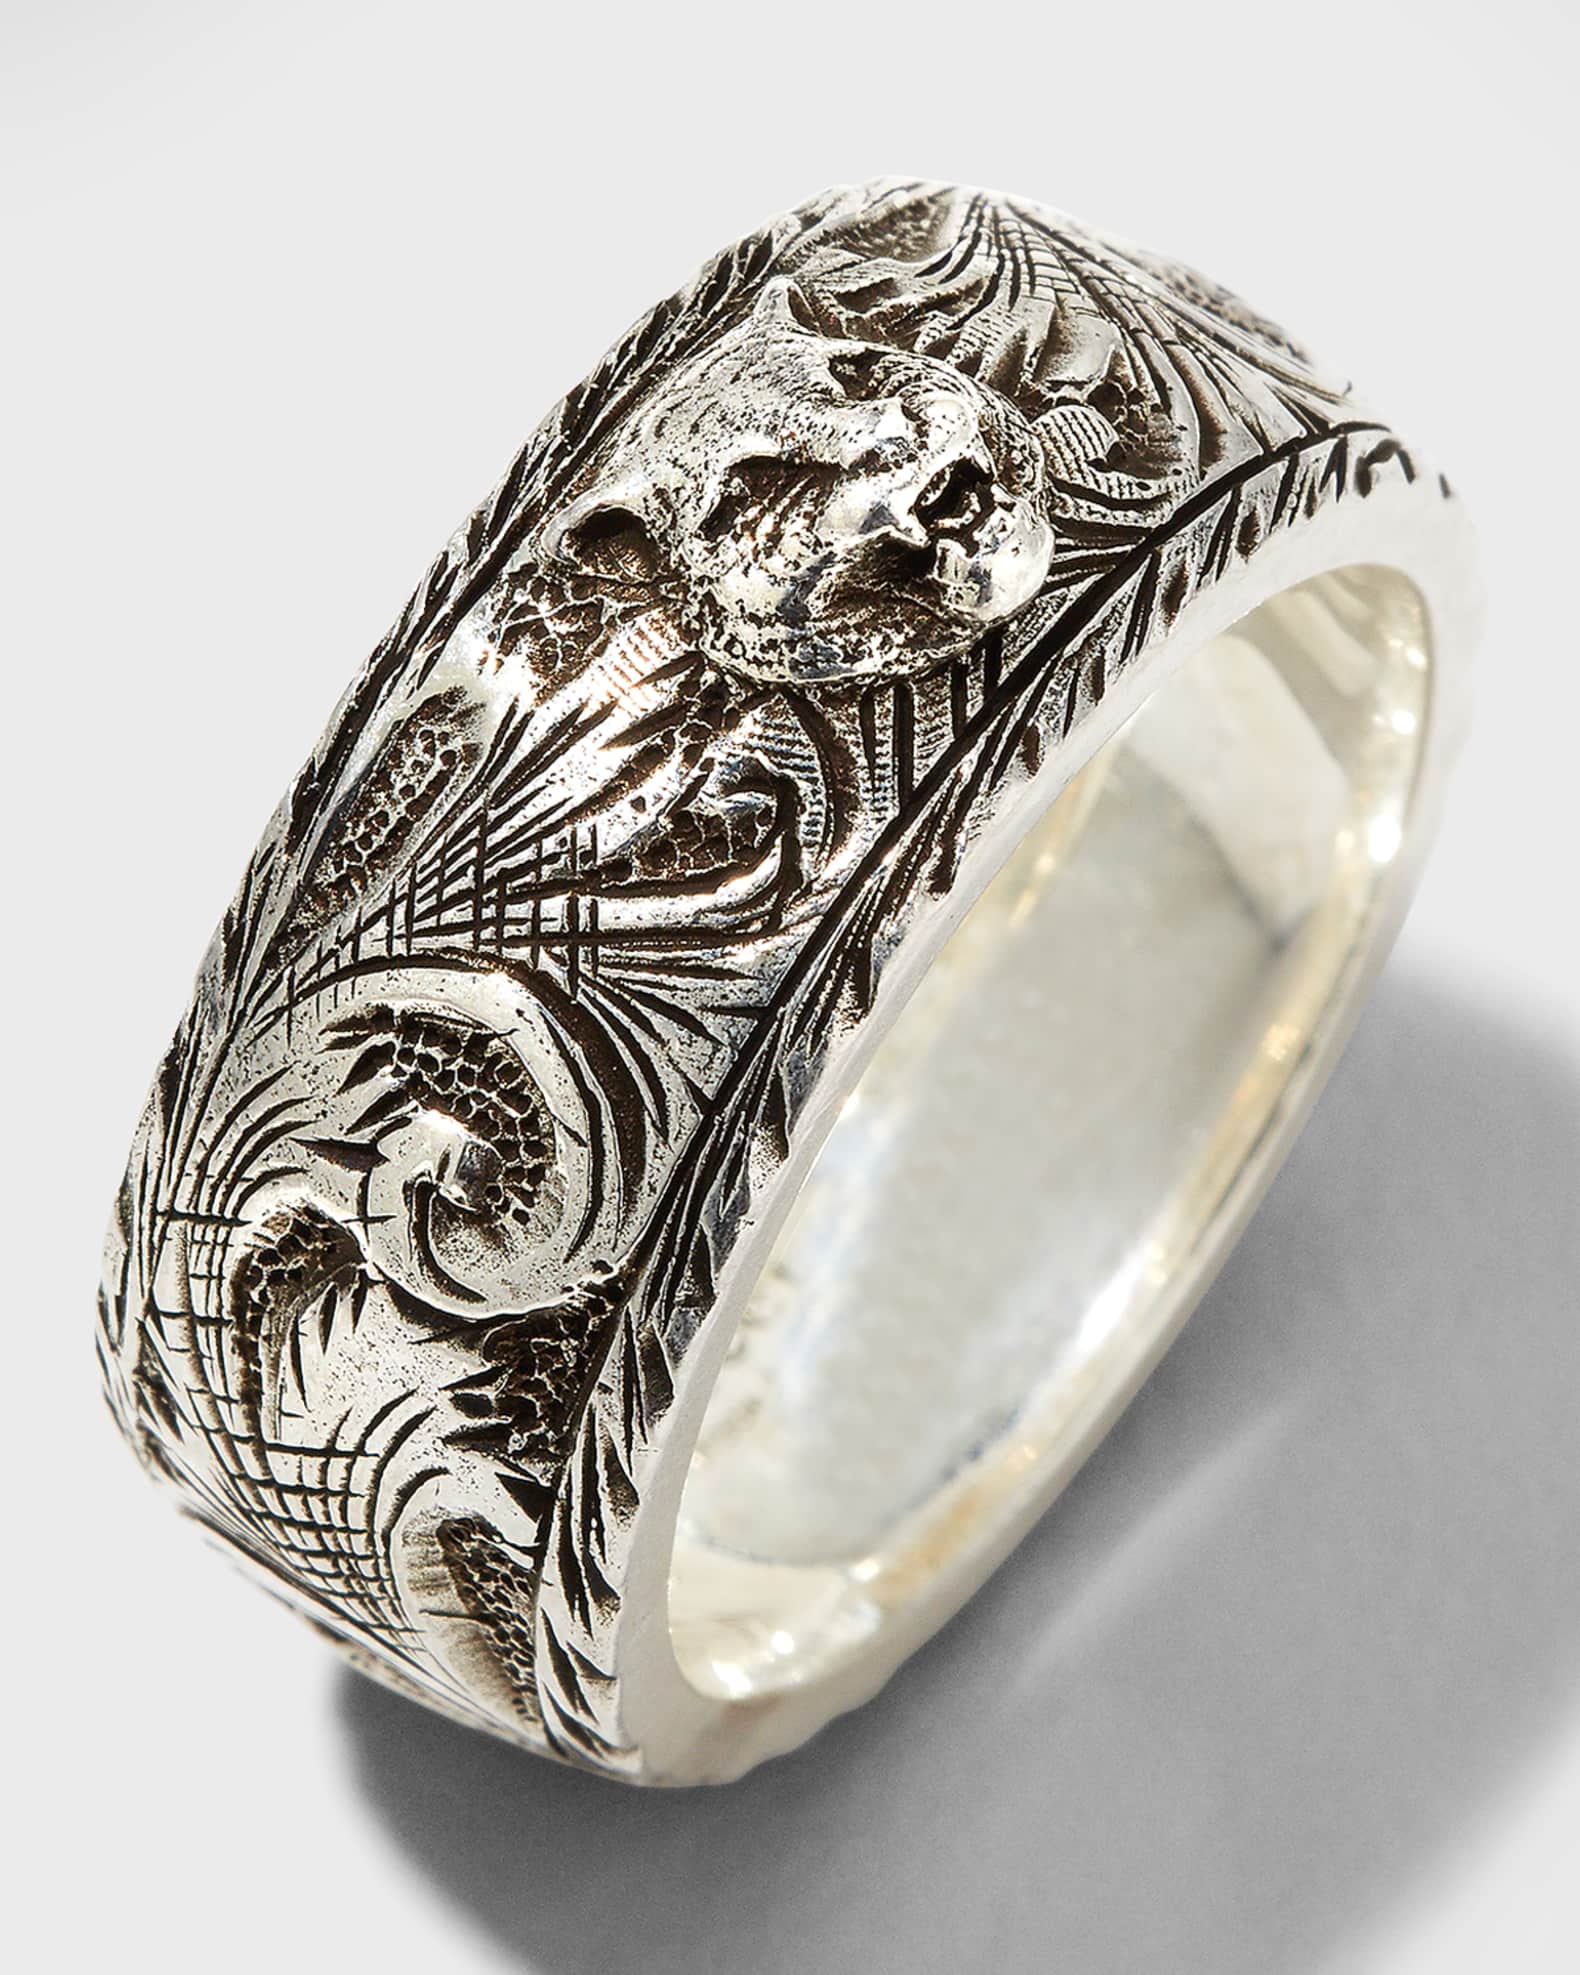 Gucci Men's Gatto Aged Sterling Silver Ring, Size 9-11 | Neiman Marcus